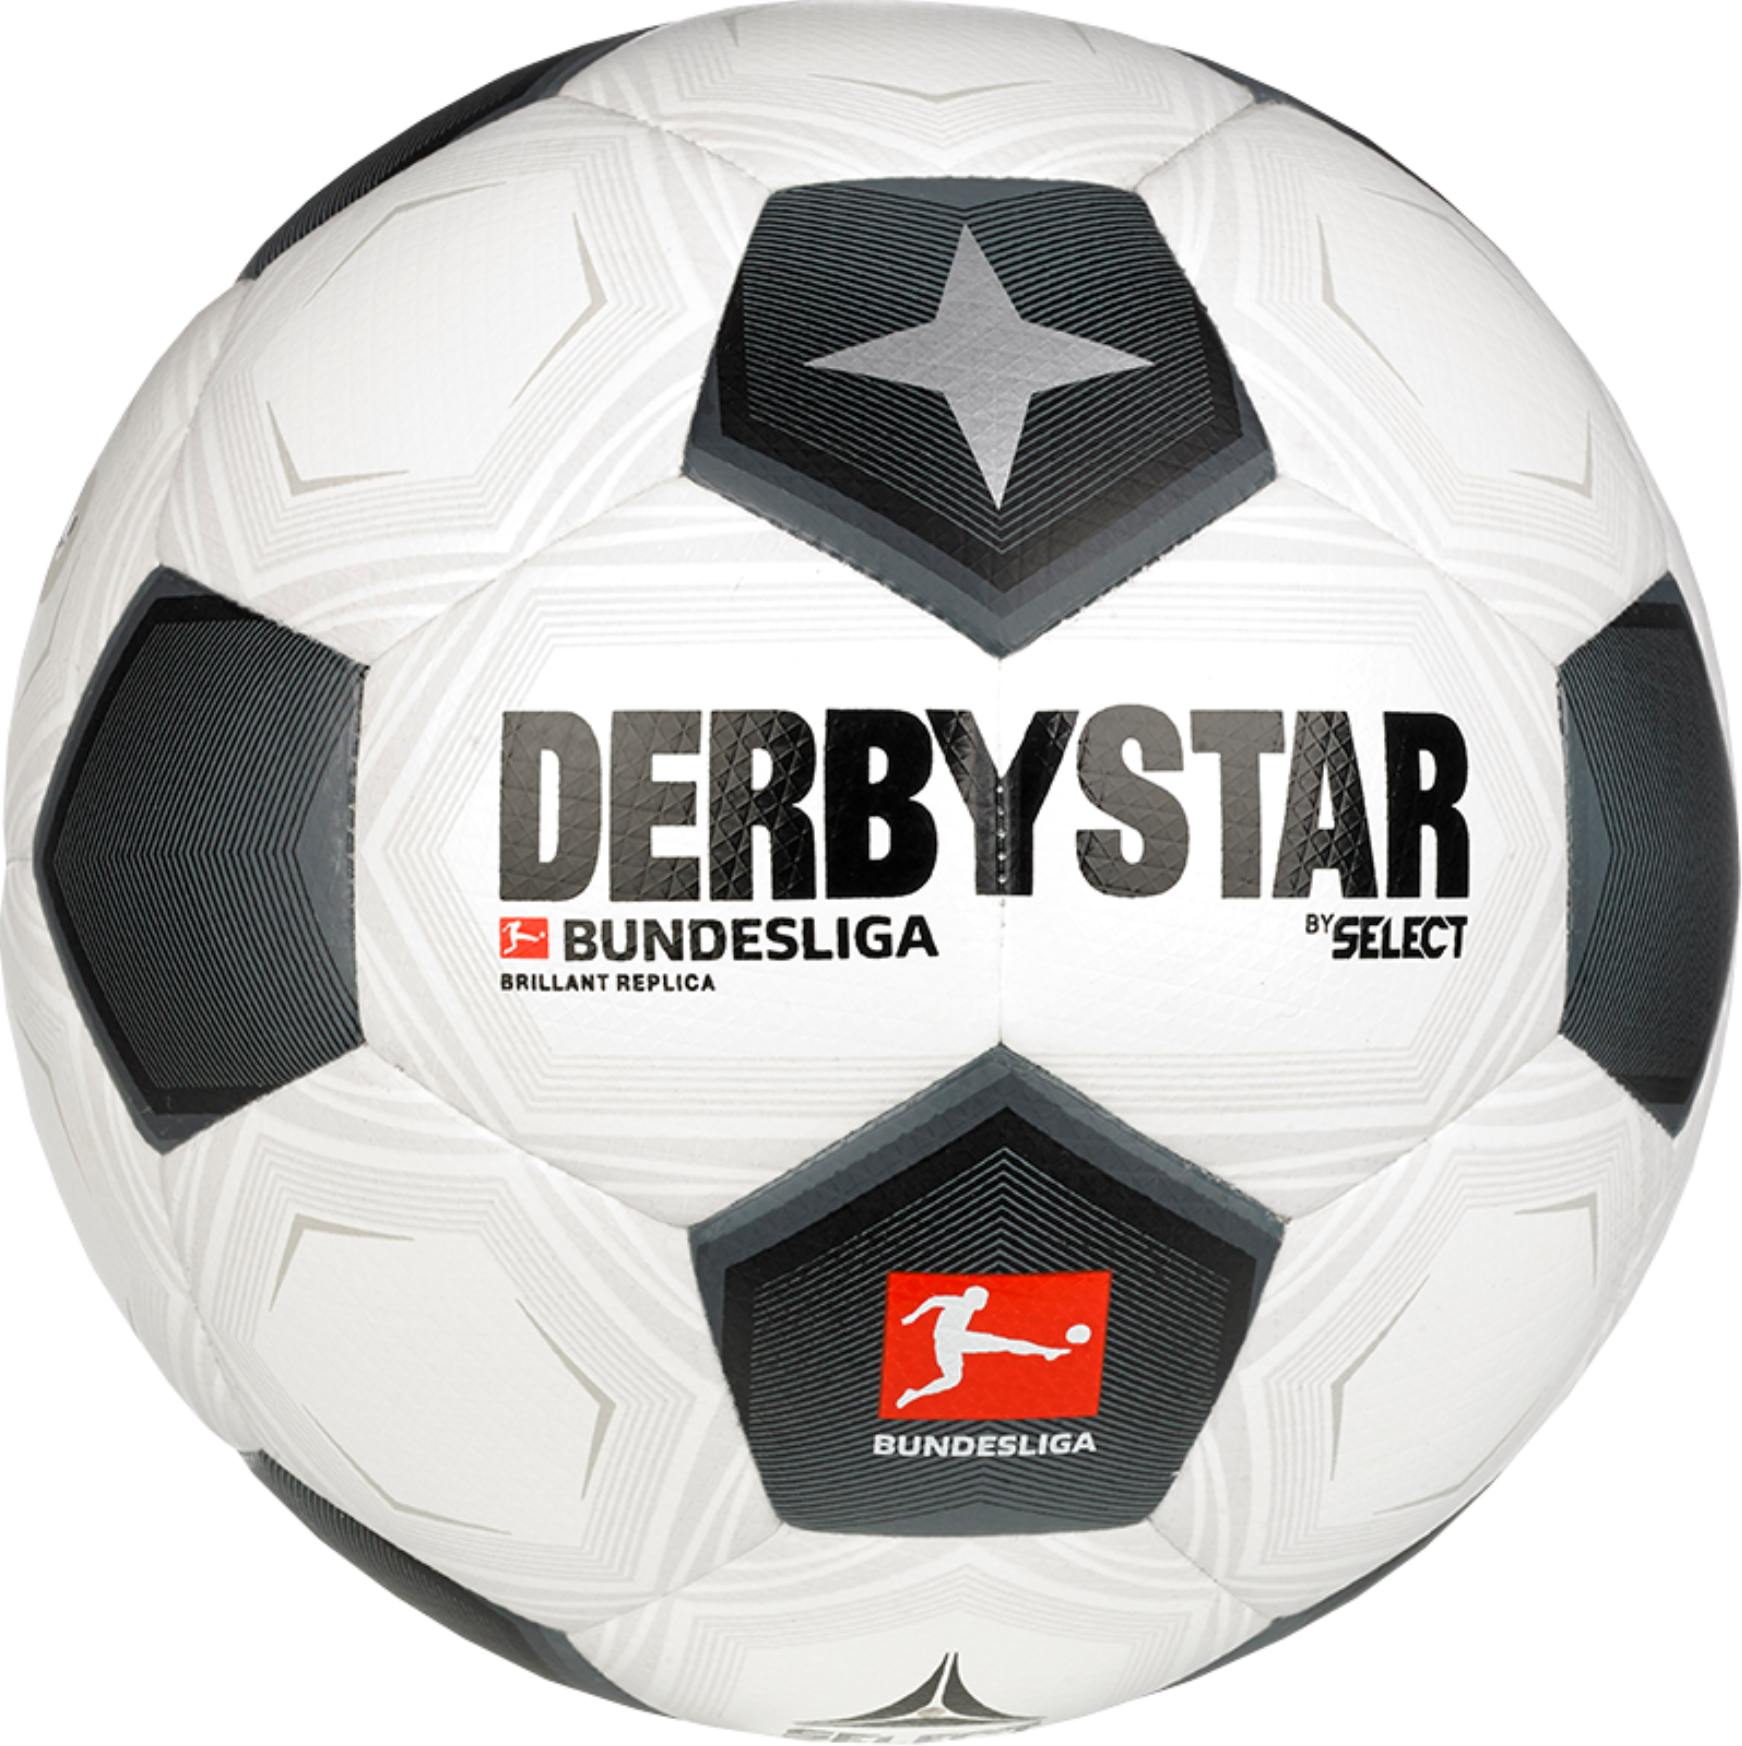 Ballon Derbystar Bundesliga Brillant Replica Classic v23